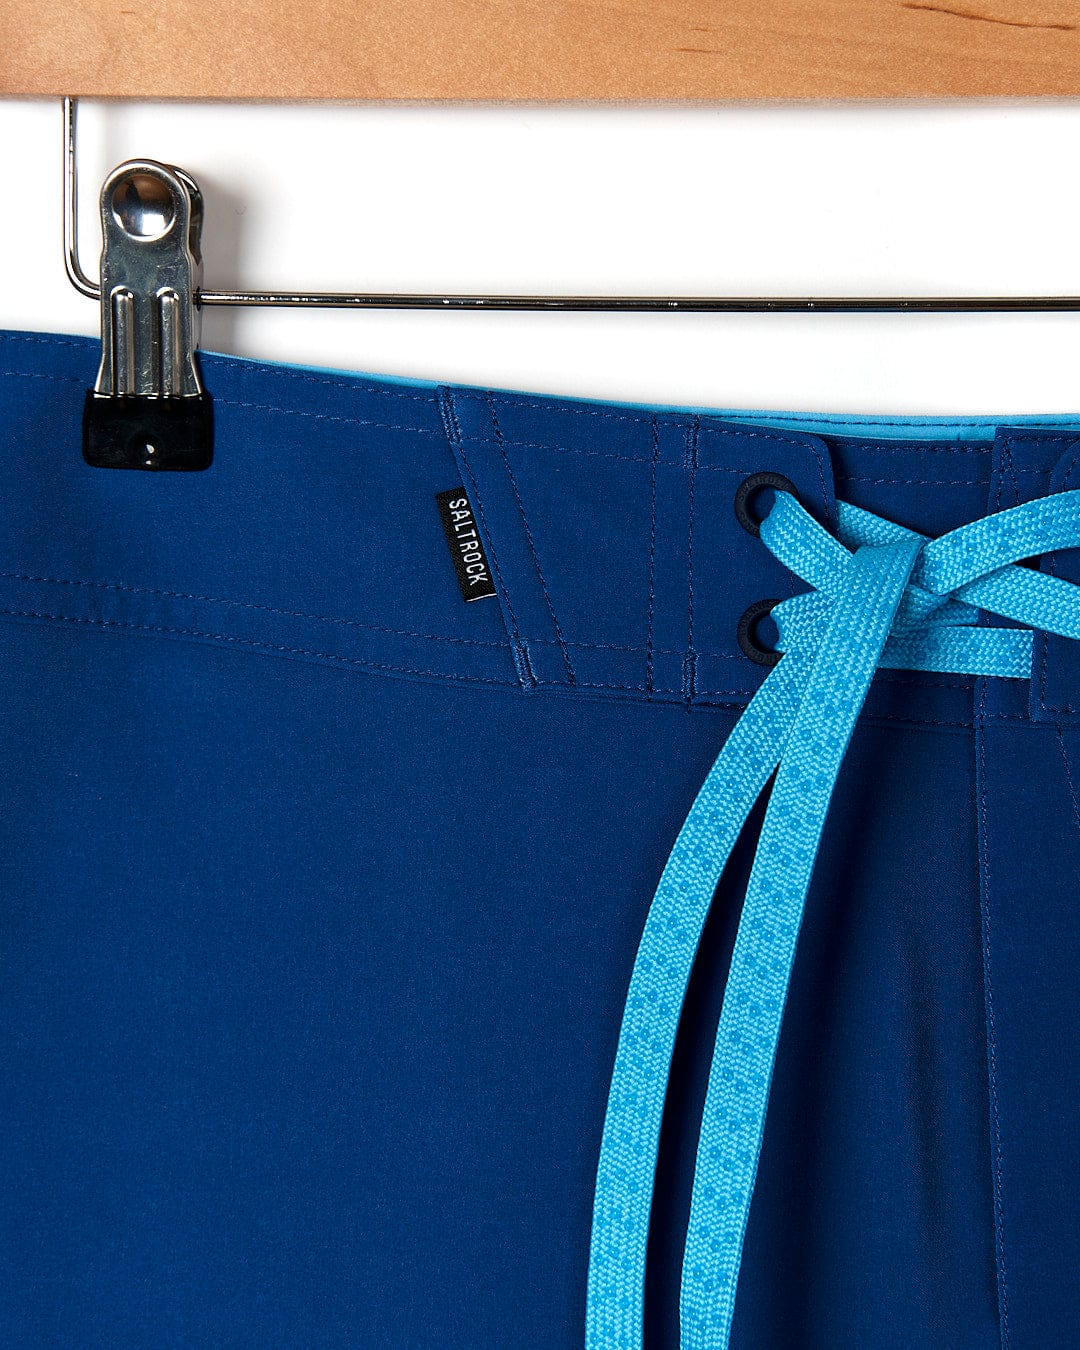 A pair of Splash Gradient - Mens Boardshort - Dark Blue by Saltrock hanging on a hanger.